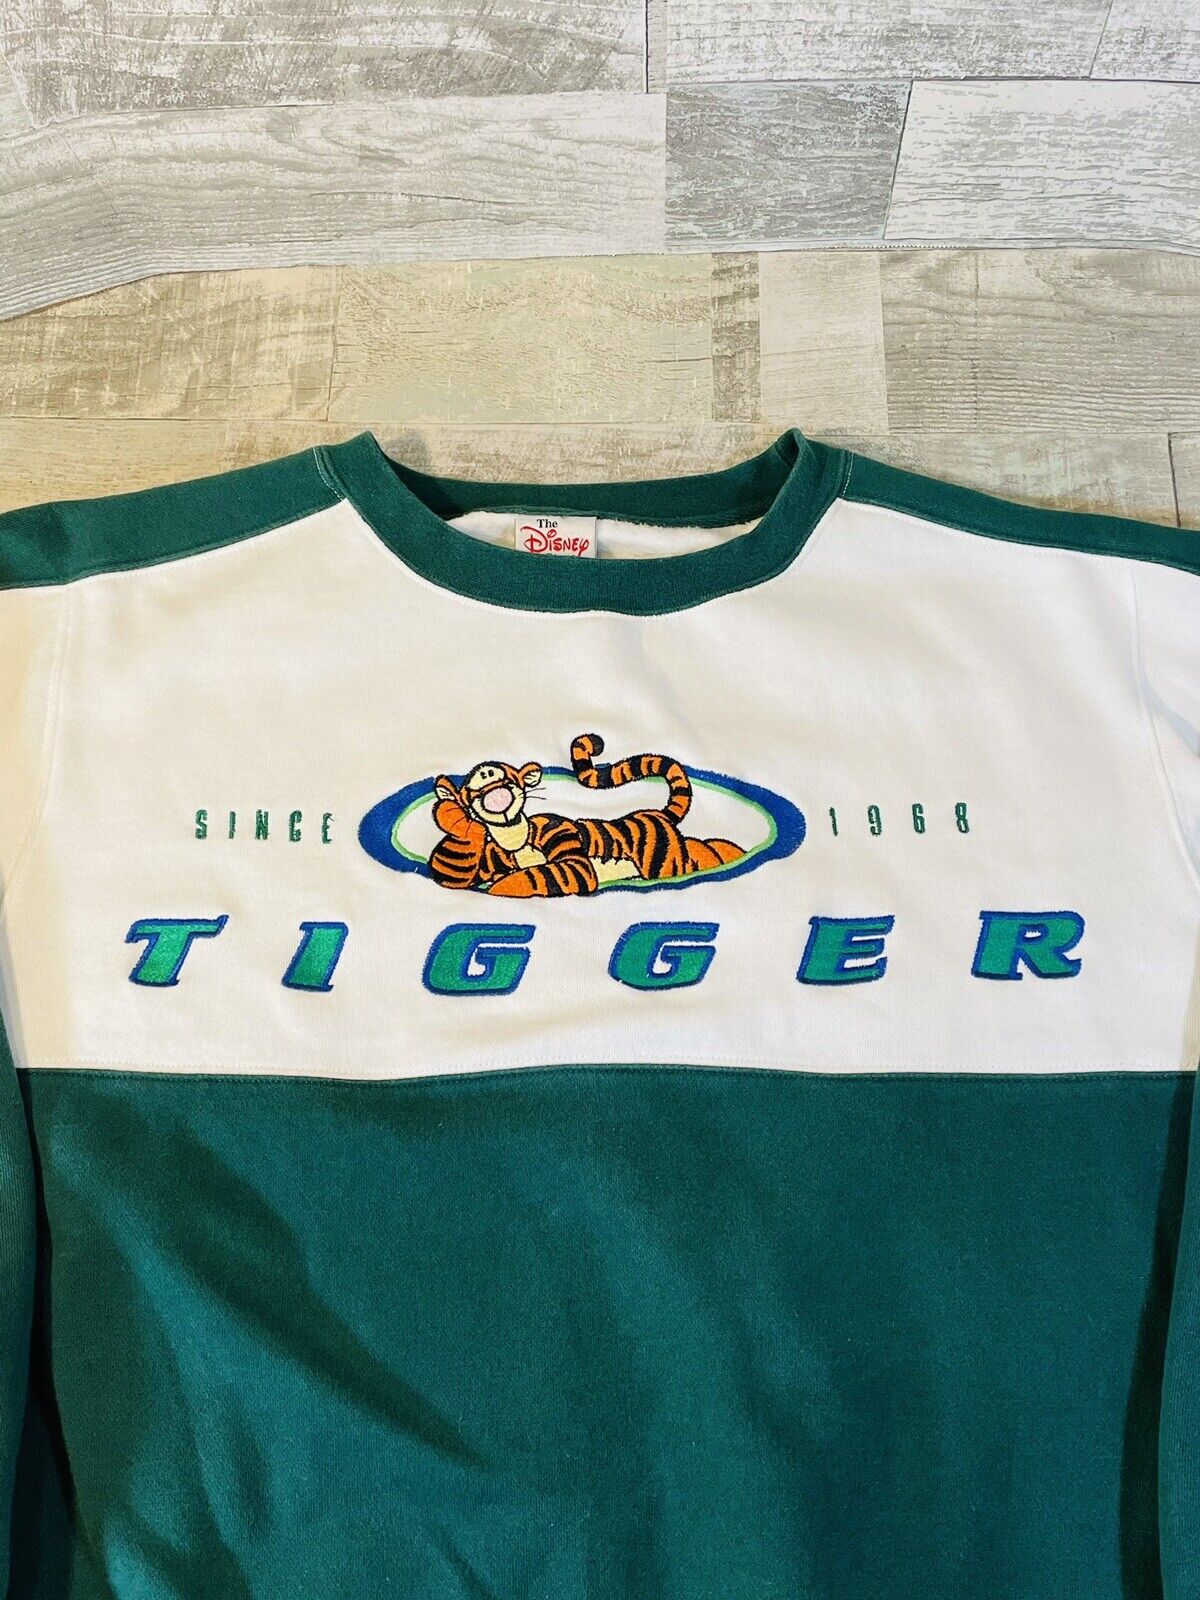 Vintage 90s Tigger Green Crewneck Disney Store Sweatshirt Est 1968 Adult Large